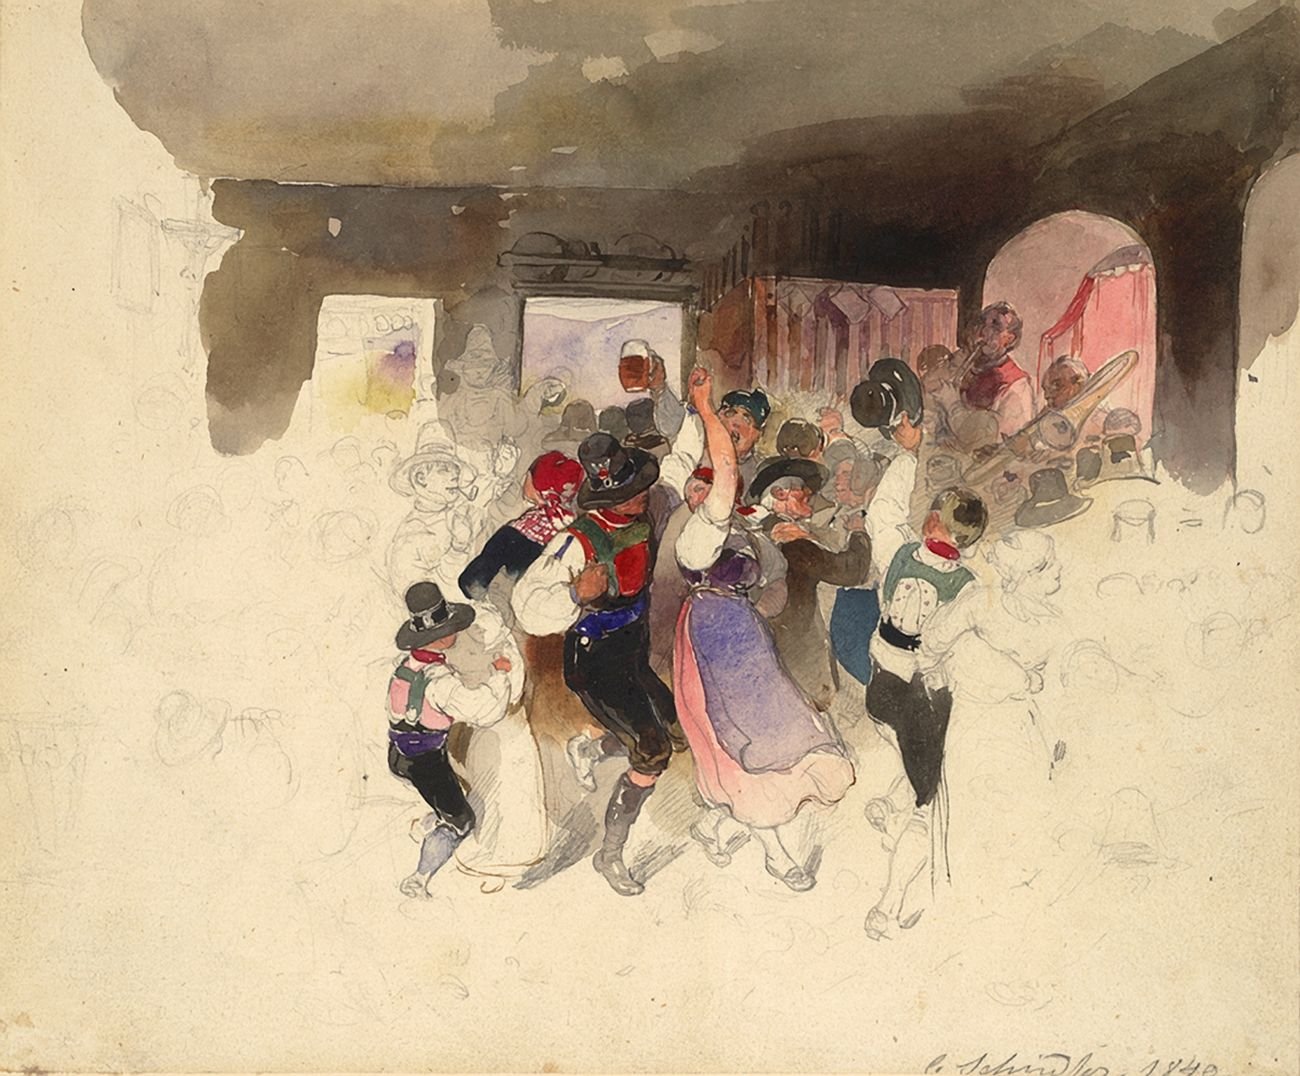 Carl Schindler, Il ballo, 1840. Albertina Museum, Vienna